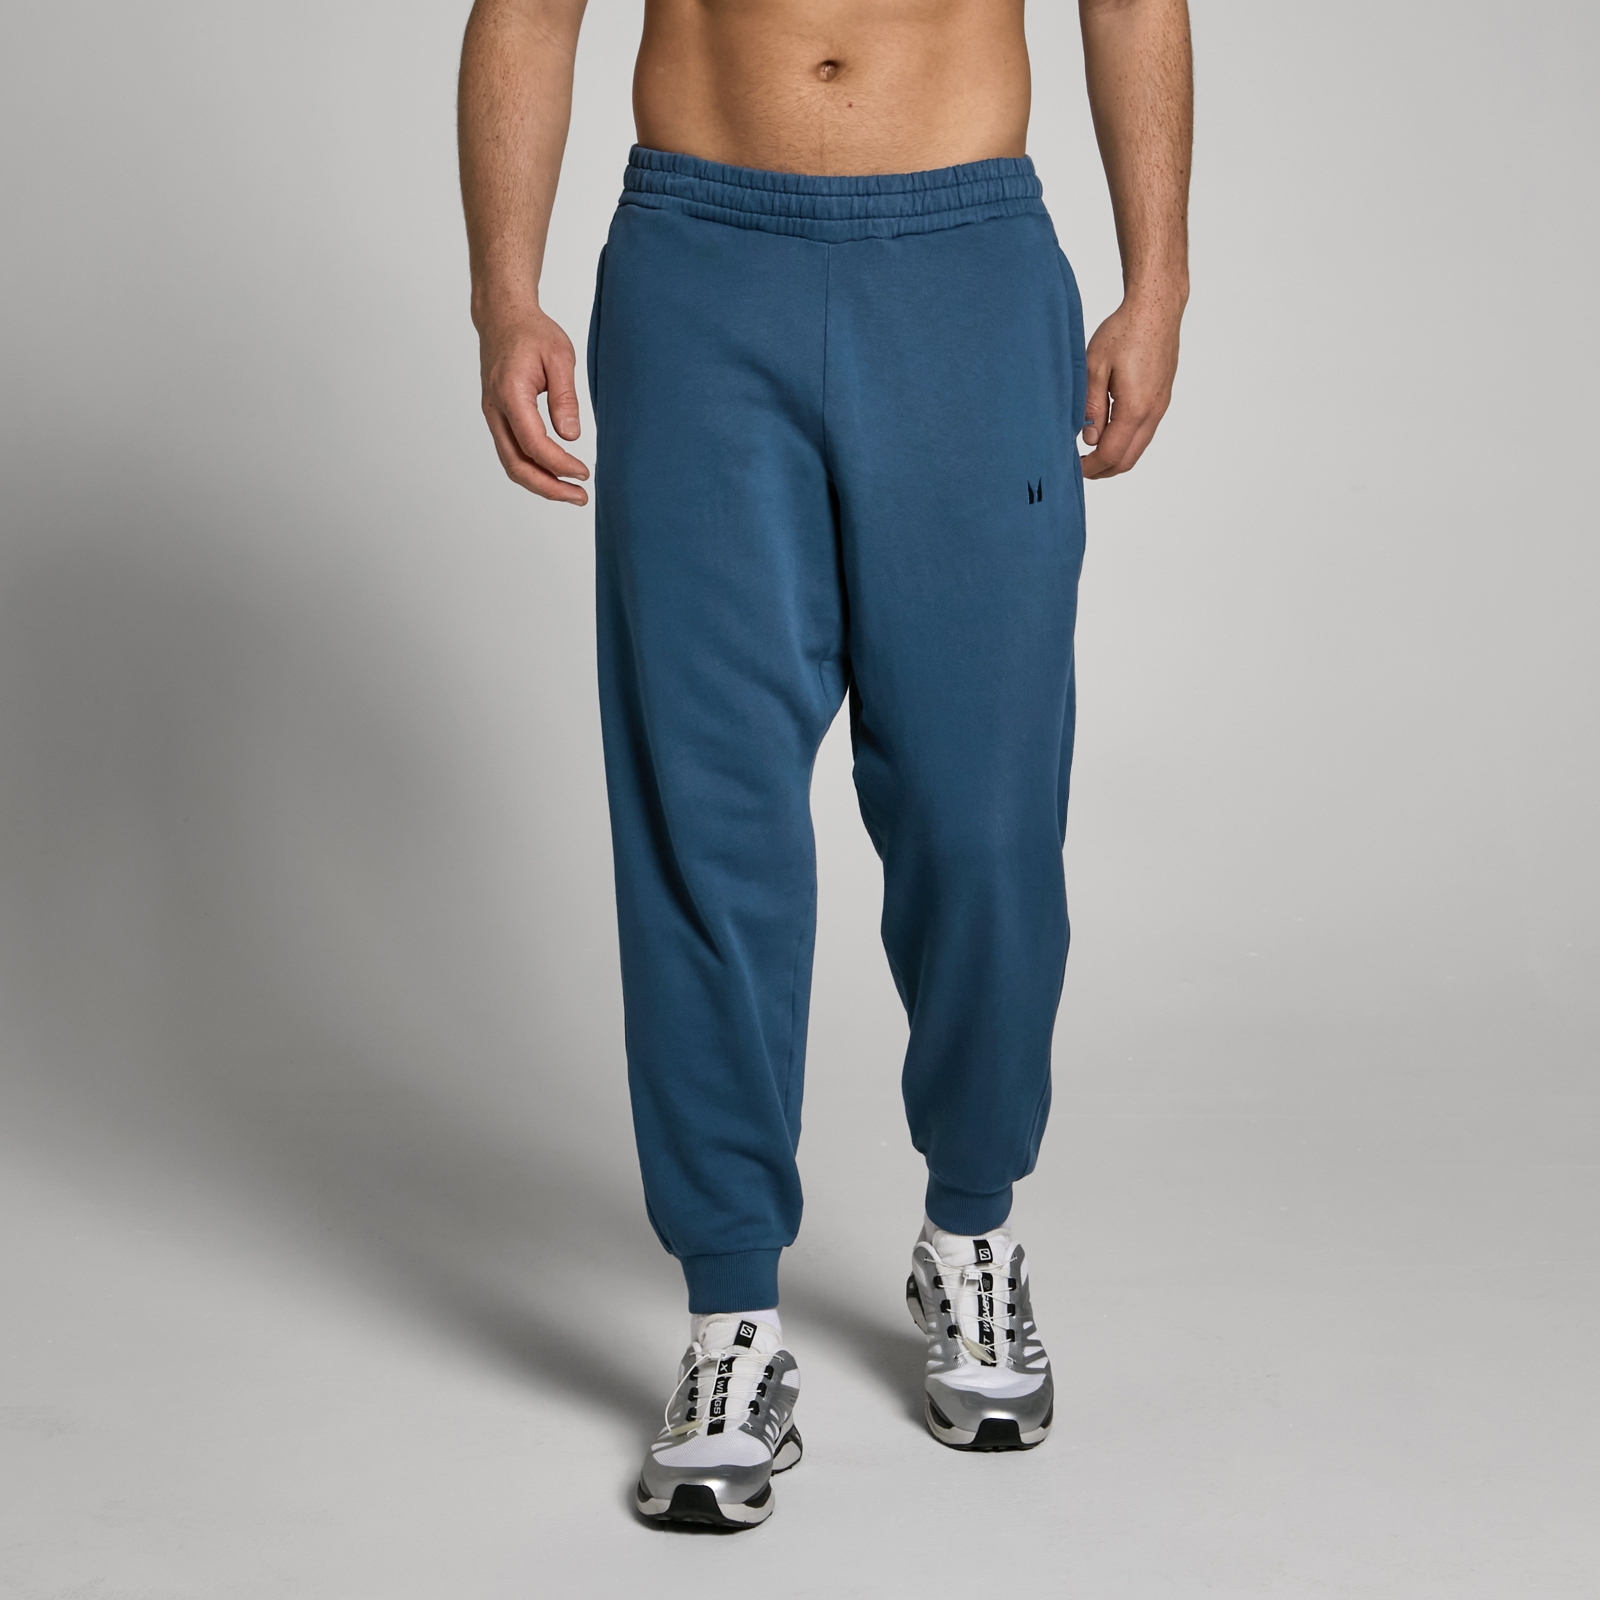 Image of Pantaloni da jogging slavati MP Tempo da uomo - Blu navy slavato - XXXL